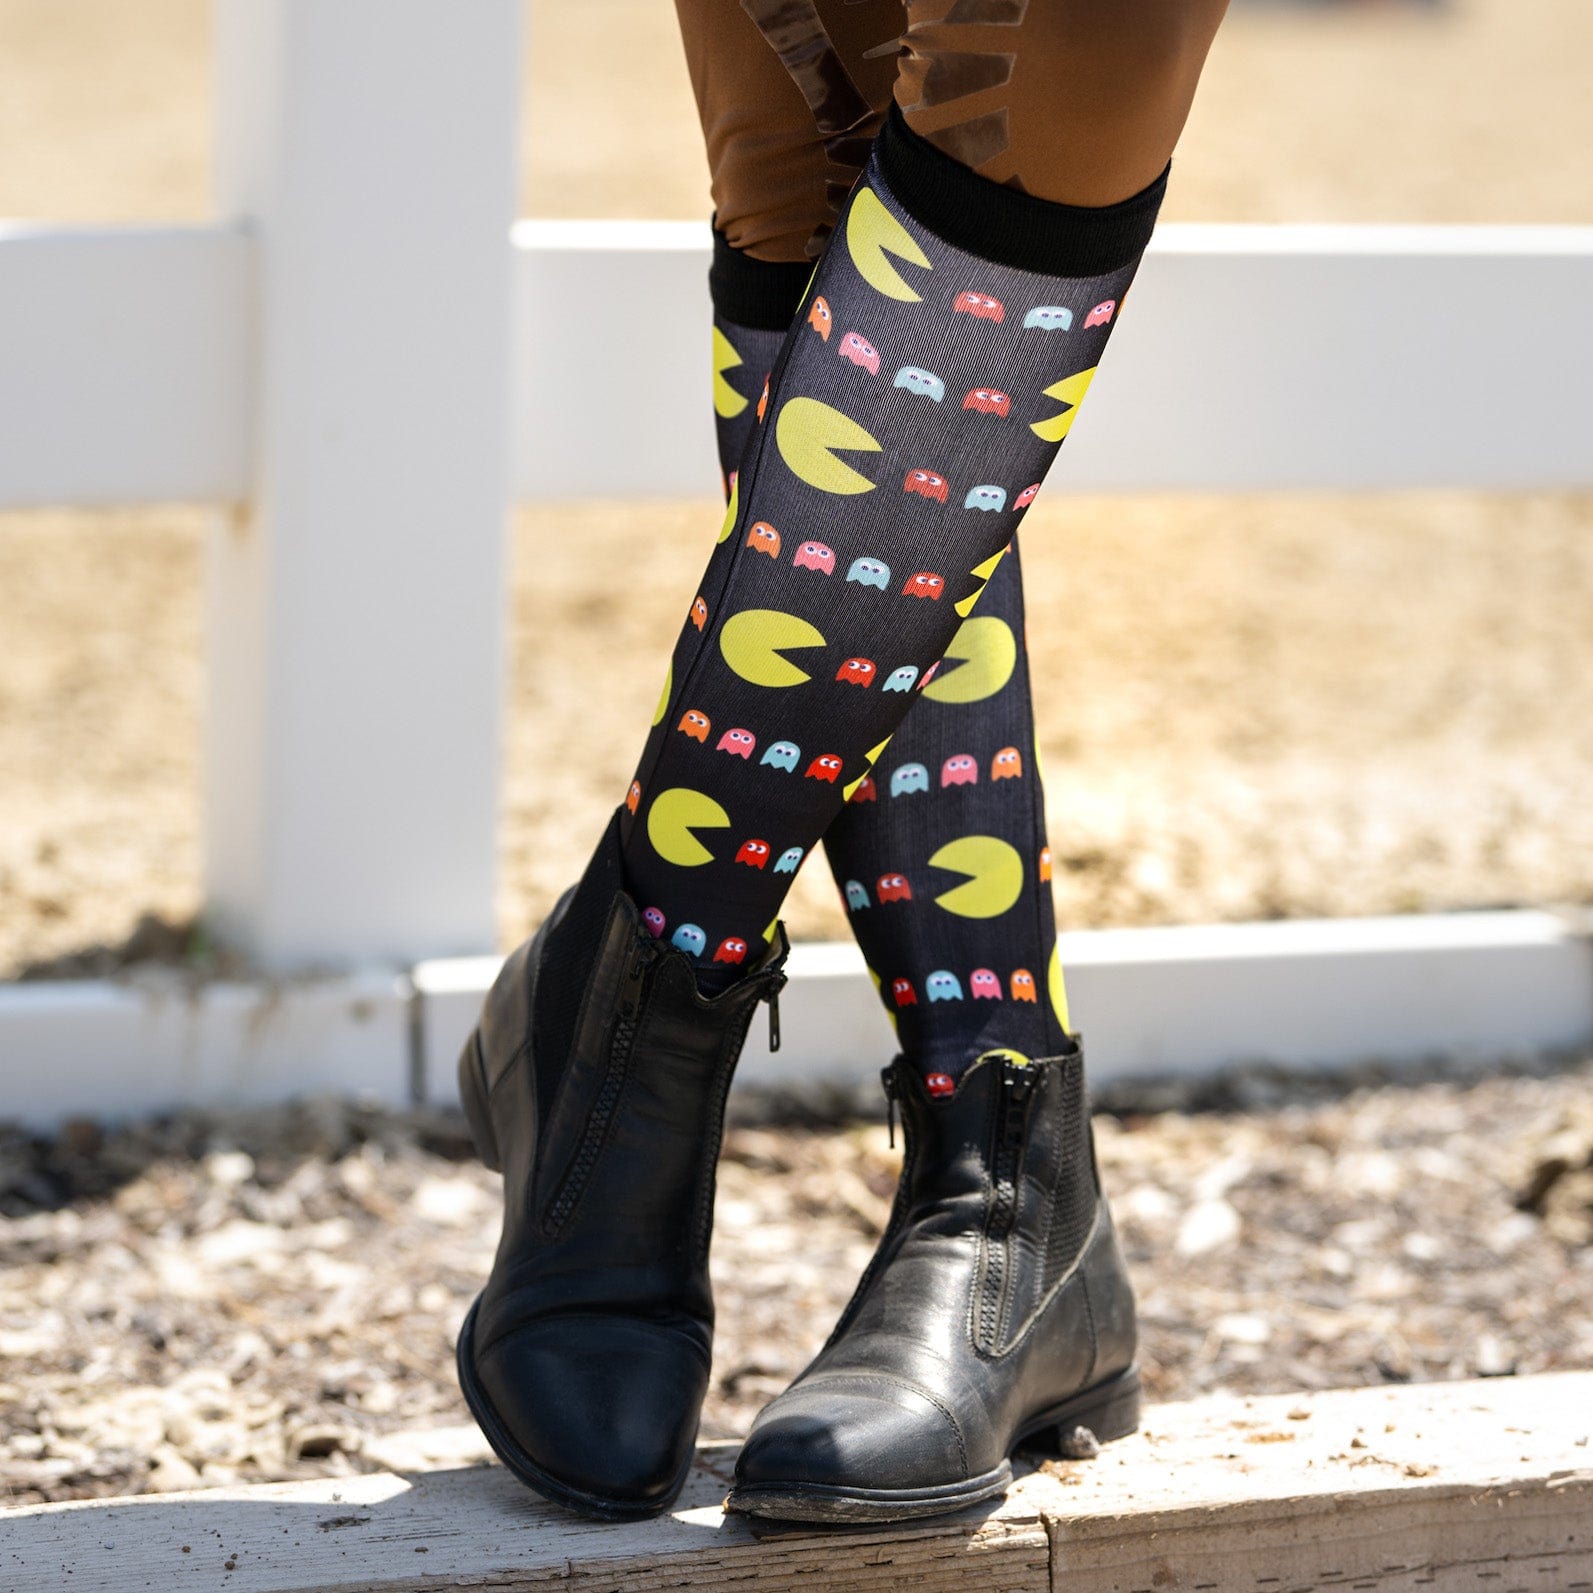 dreamers & schemers Pair & A Spare NomNom Pair & a Spare equestrian boot socks boot socks thin socks riding socks pattern socks tall socks funny socks knee high socks horse socks horse show socks